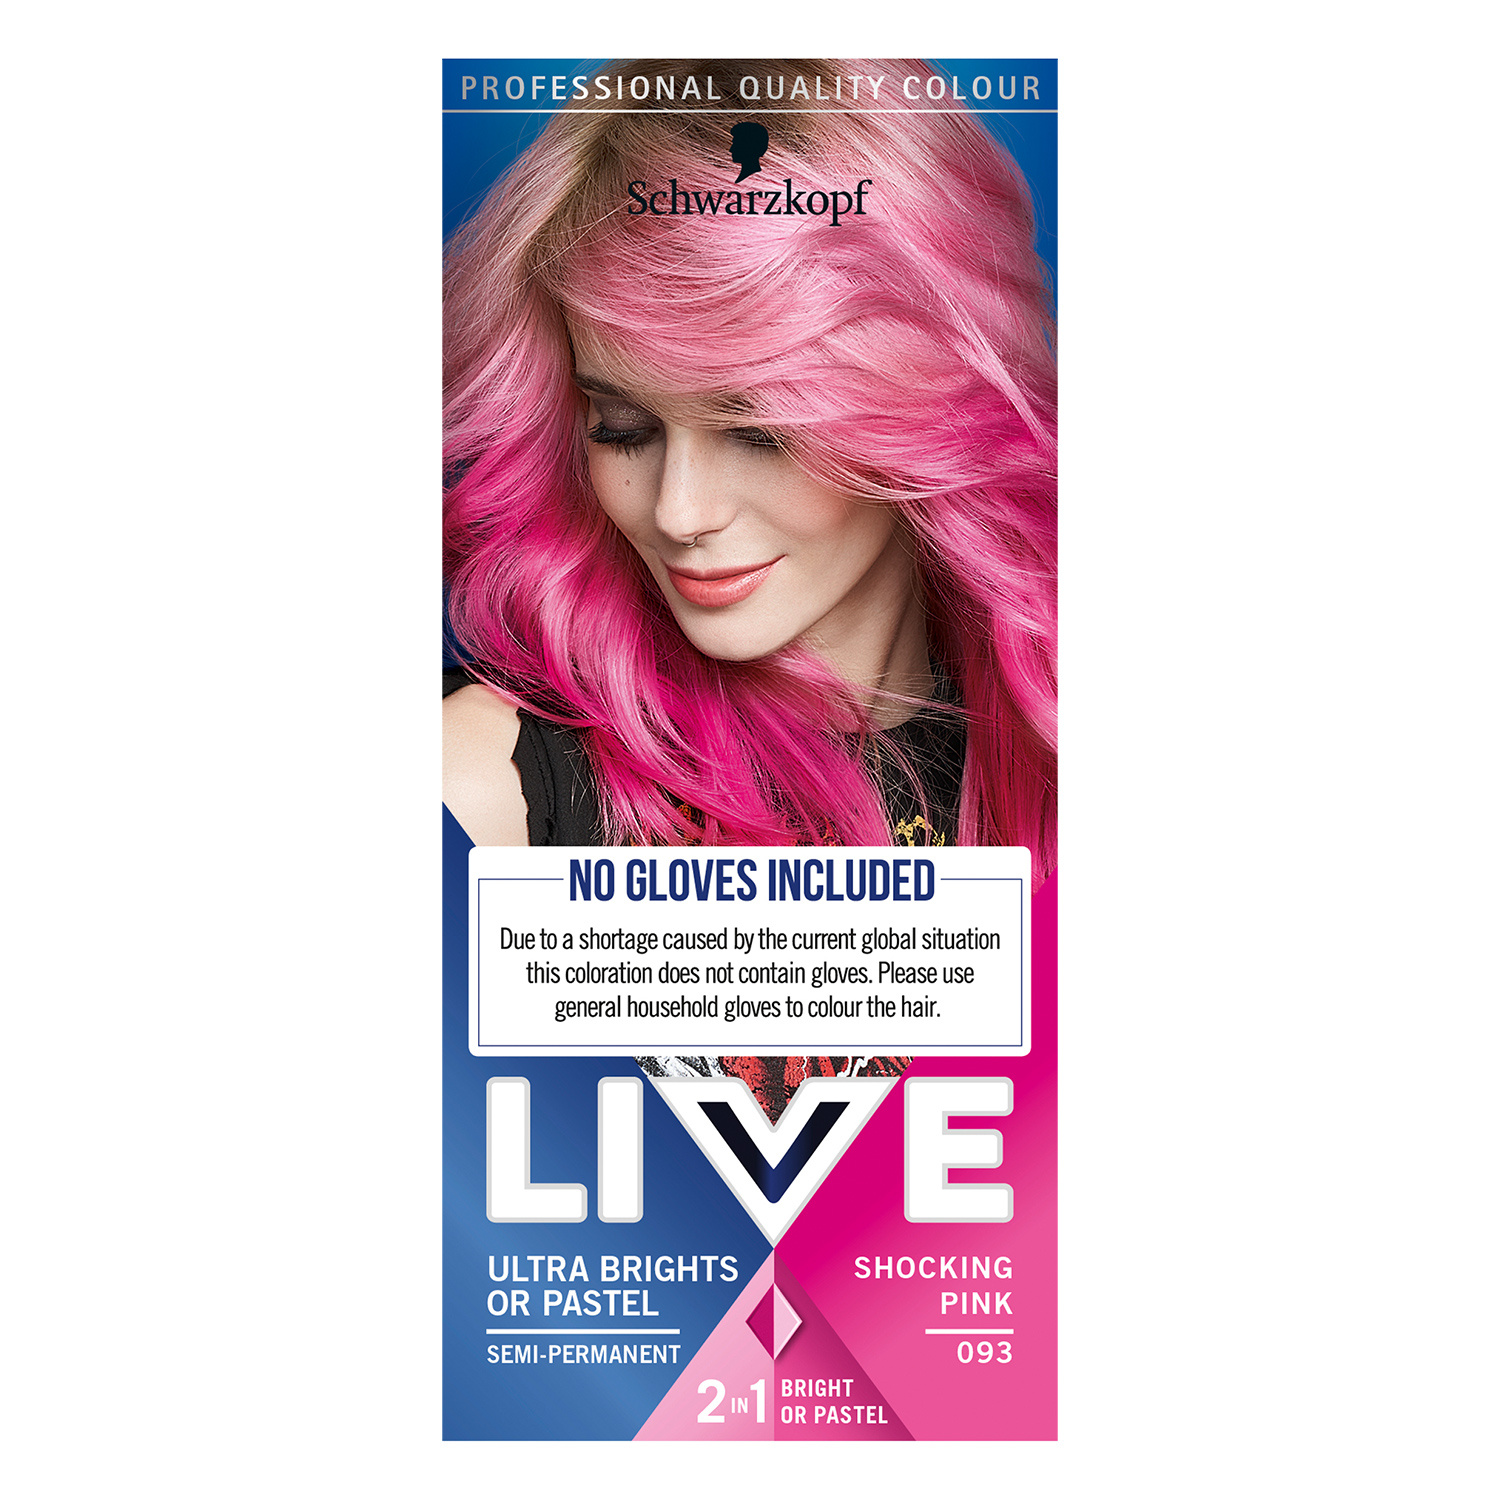 Schwarzkopf Live Ultra Brights Or Pastel 93 Shocking Pink Semi Permanent Hair Dye